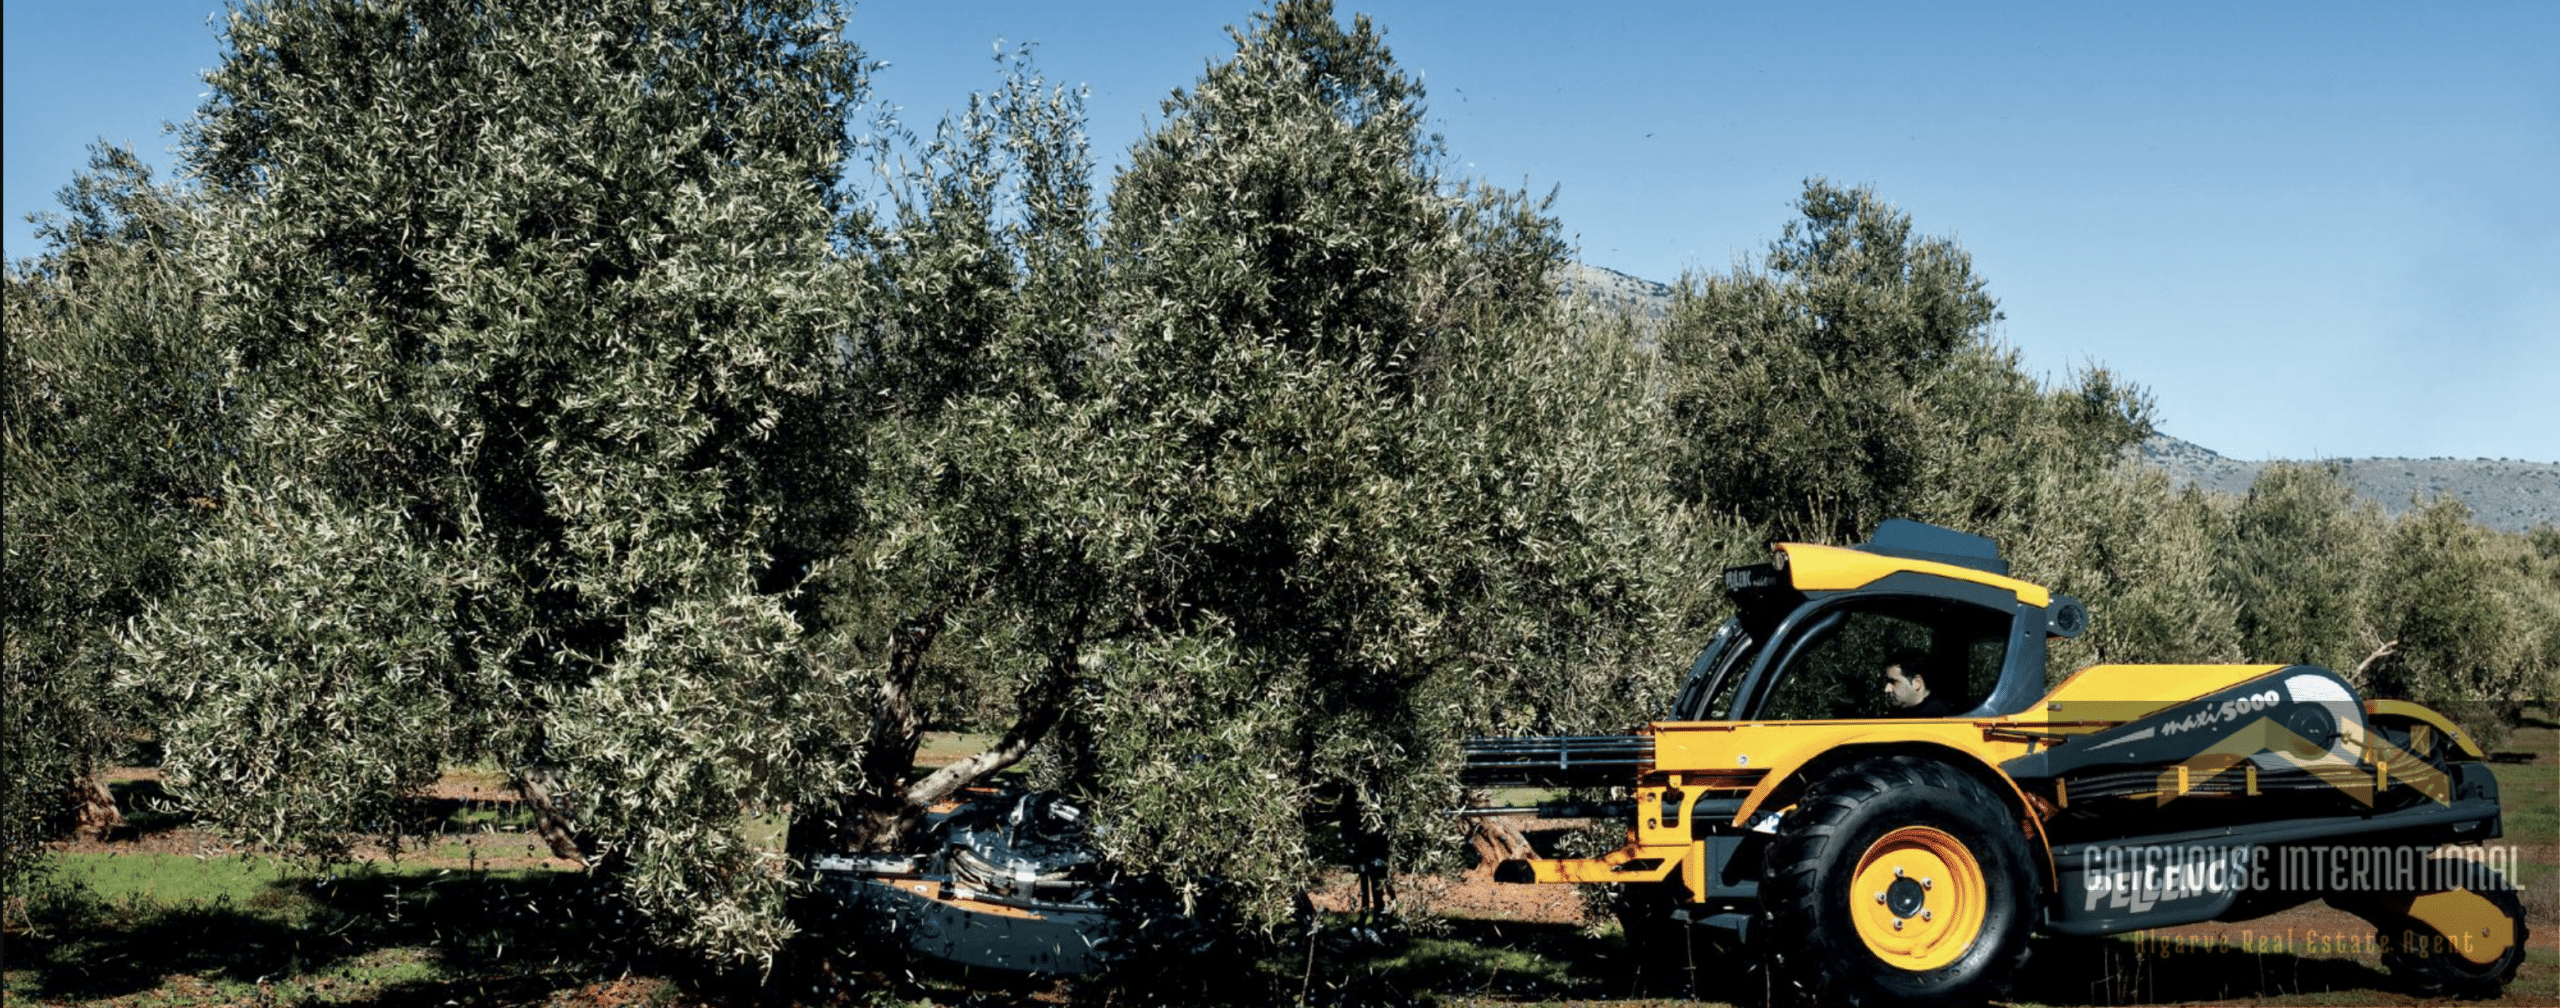 The Harvesting Process of Olive Trees in Algarve